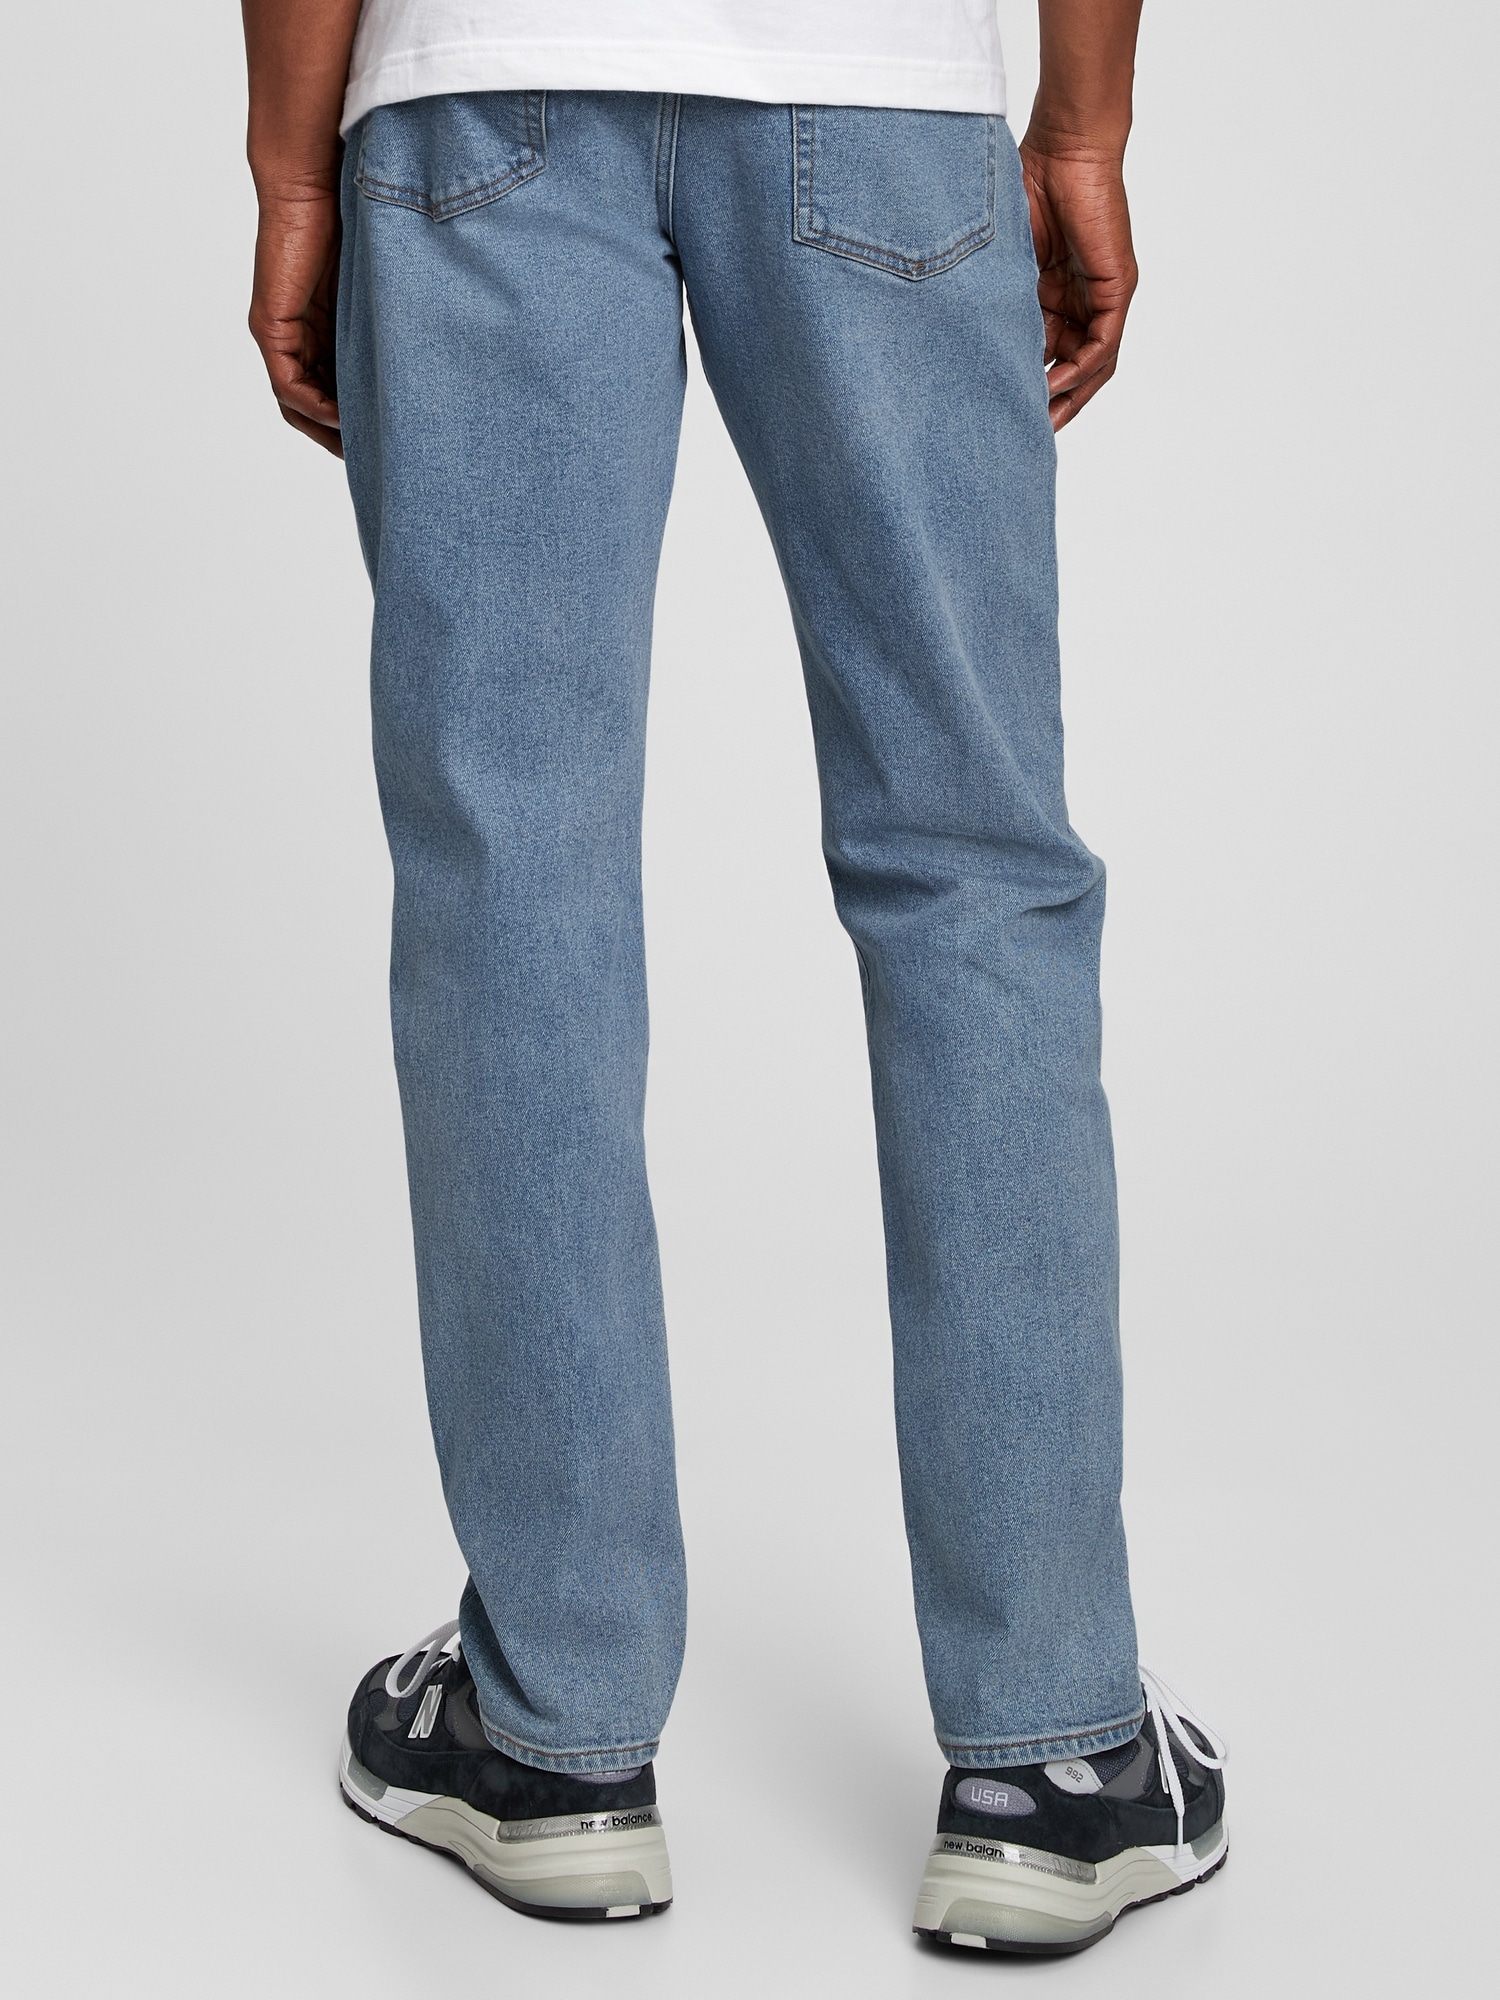 GAP, Jeans, Gapflex Soft Wear Slim Fit Jeans With Washwell Size 3 X 32